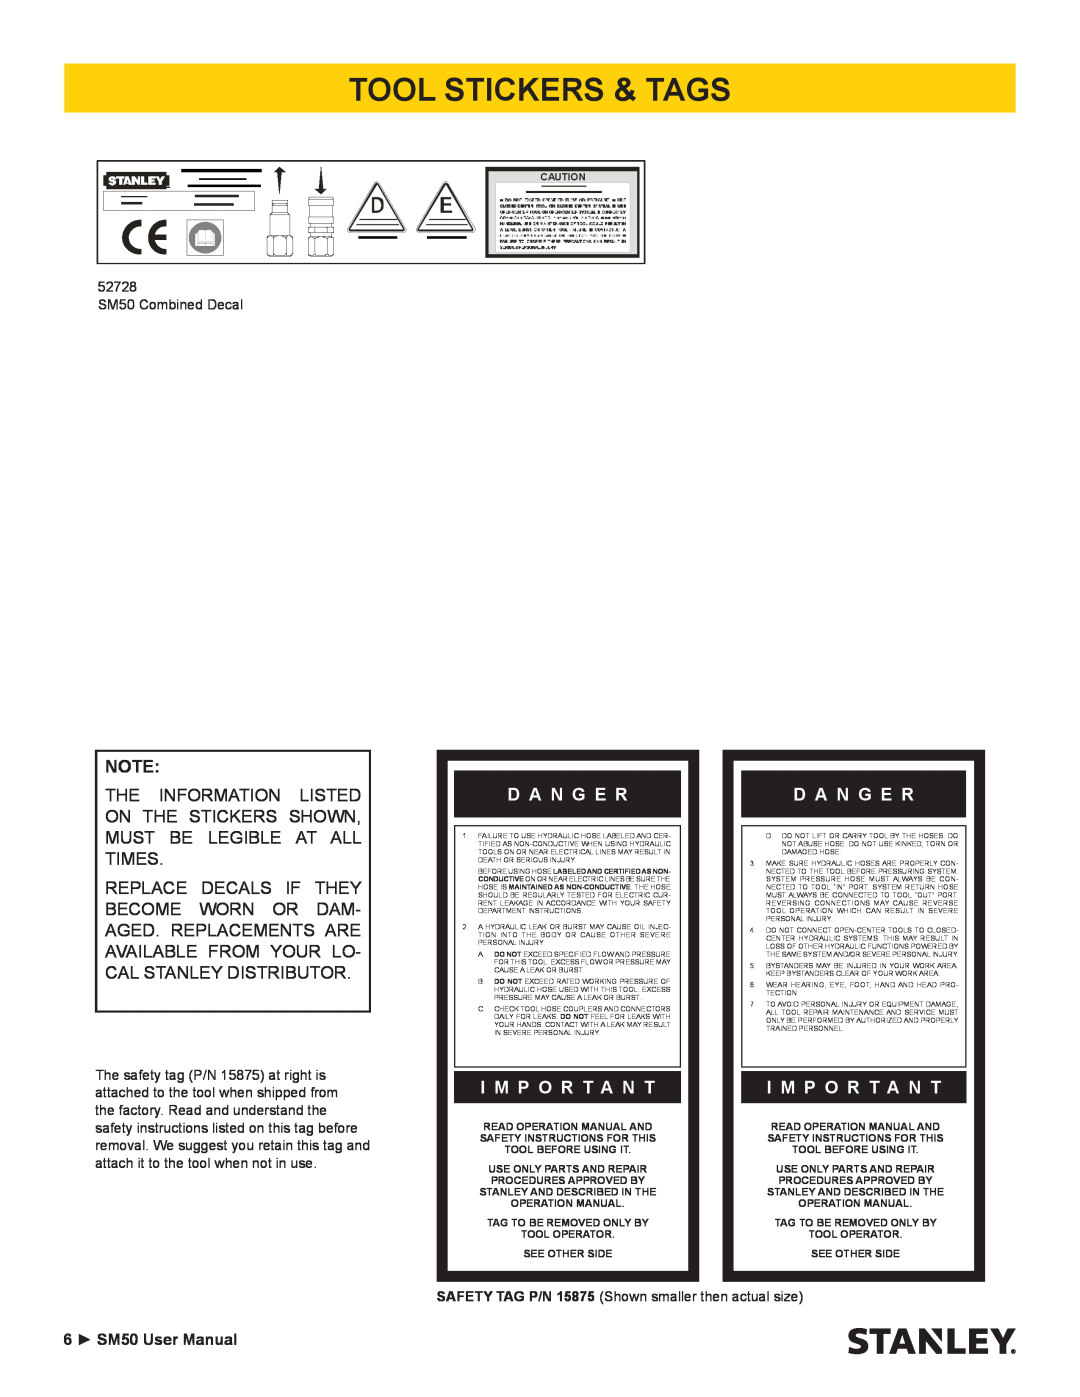 Stanley Black & Decker SM50 user manual Tool Stickers & Tags, D A N G E R, I M P O R T A N T, Im P O R T A N T 